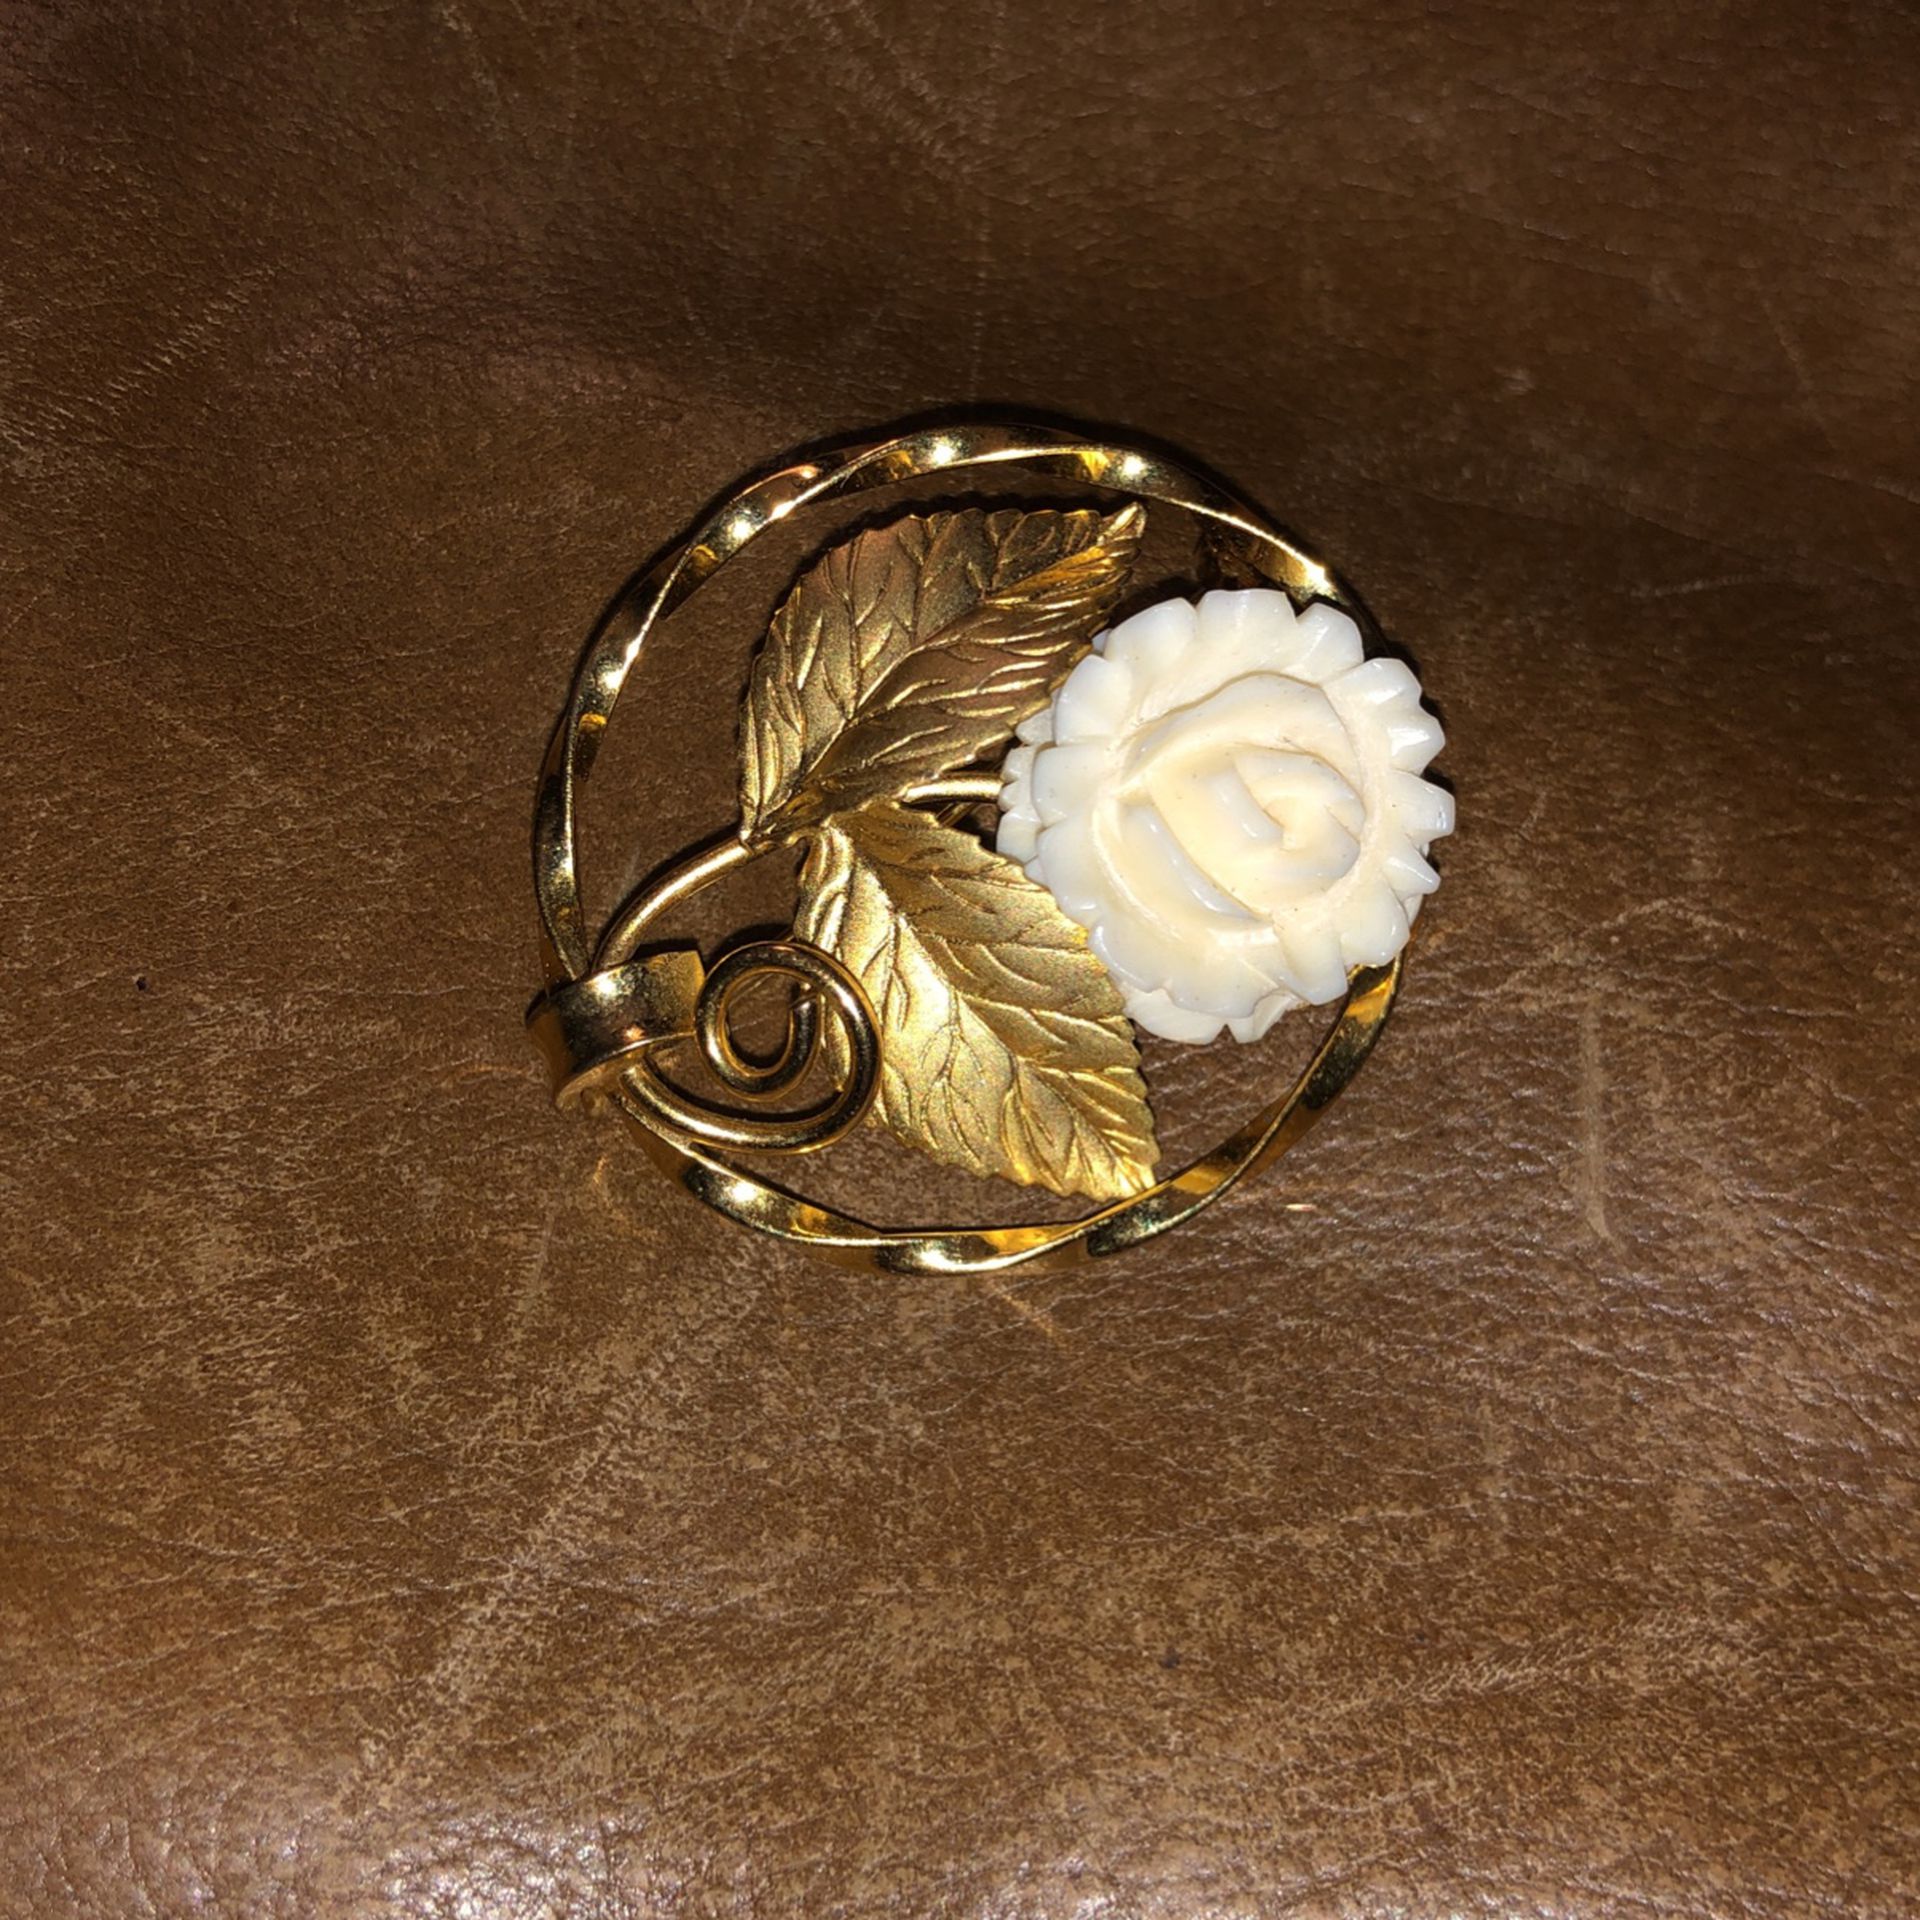 Karen Lynn, 1 inch 12 karat gold filled brooch